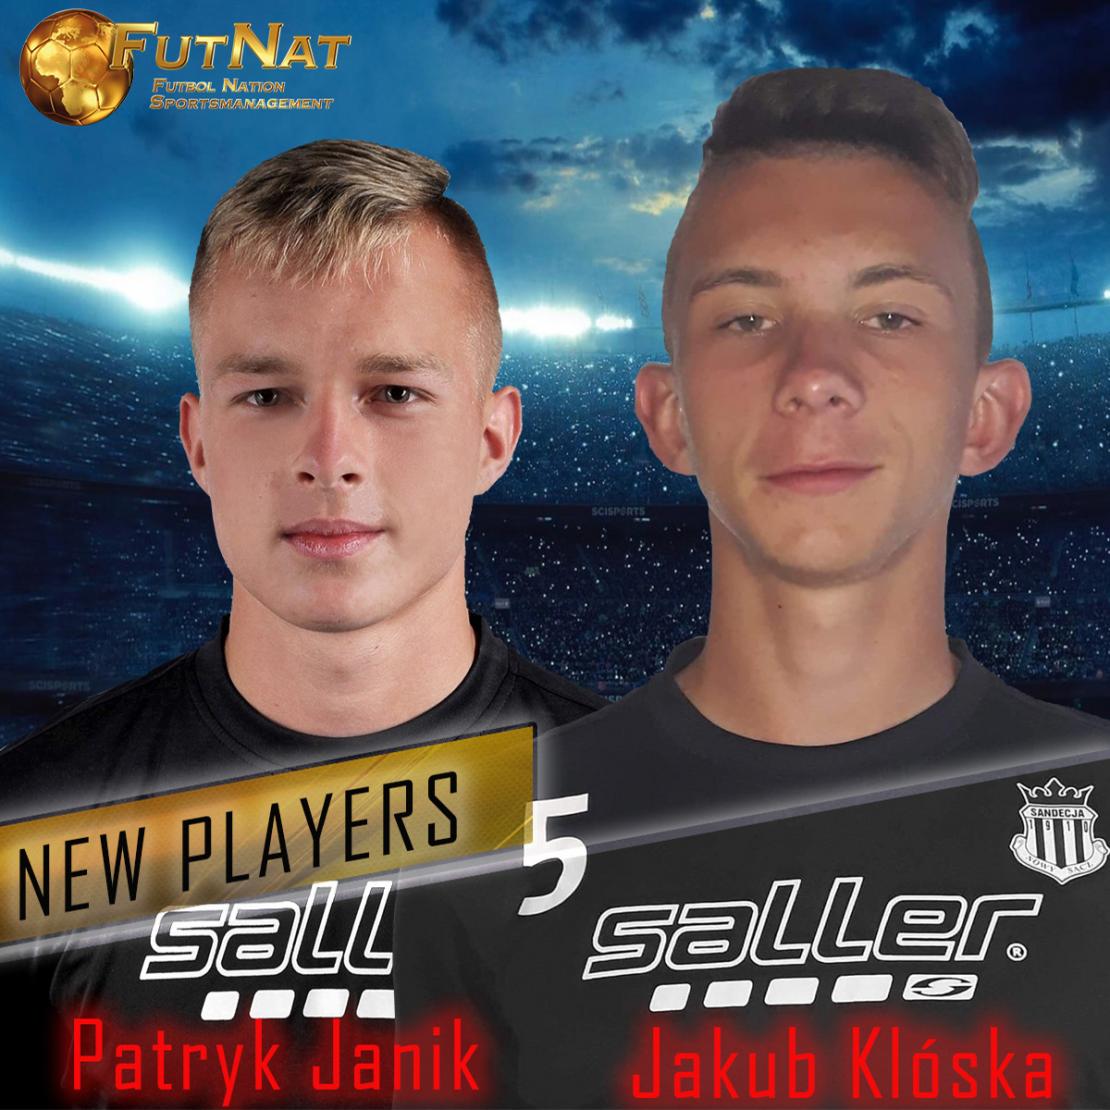 New Players Jakub Klóska und Patryk Janik join the FutNat-Family